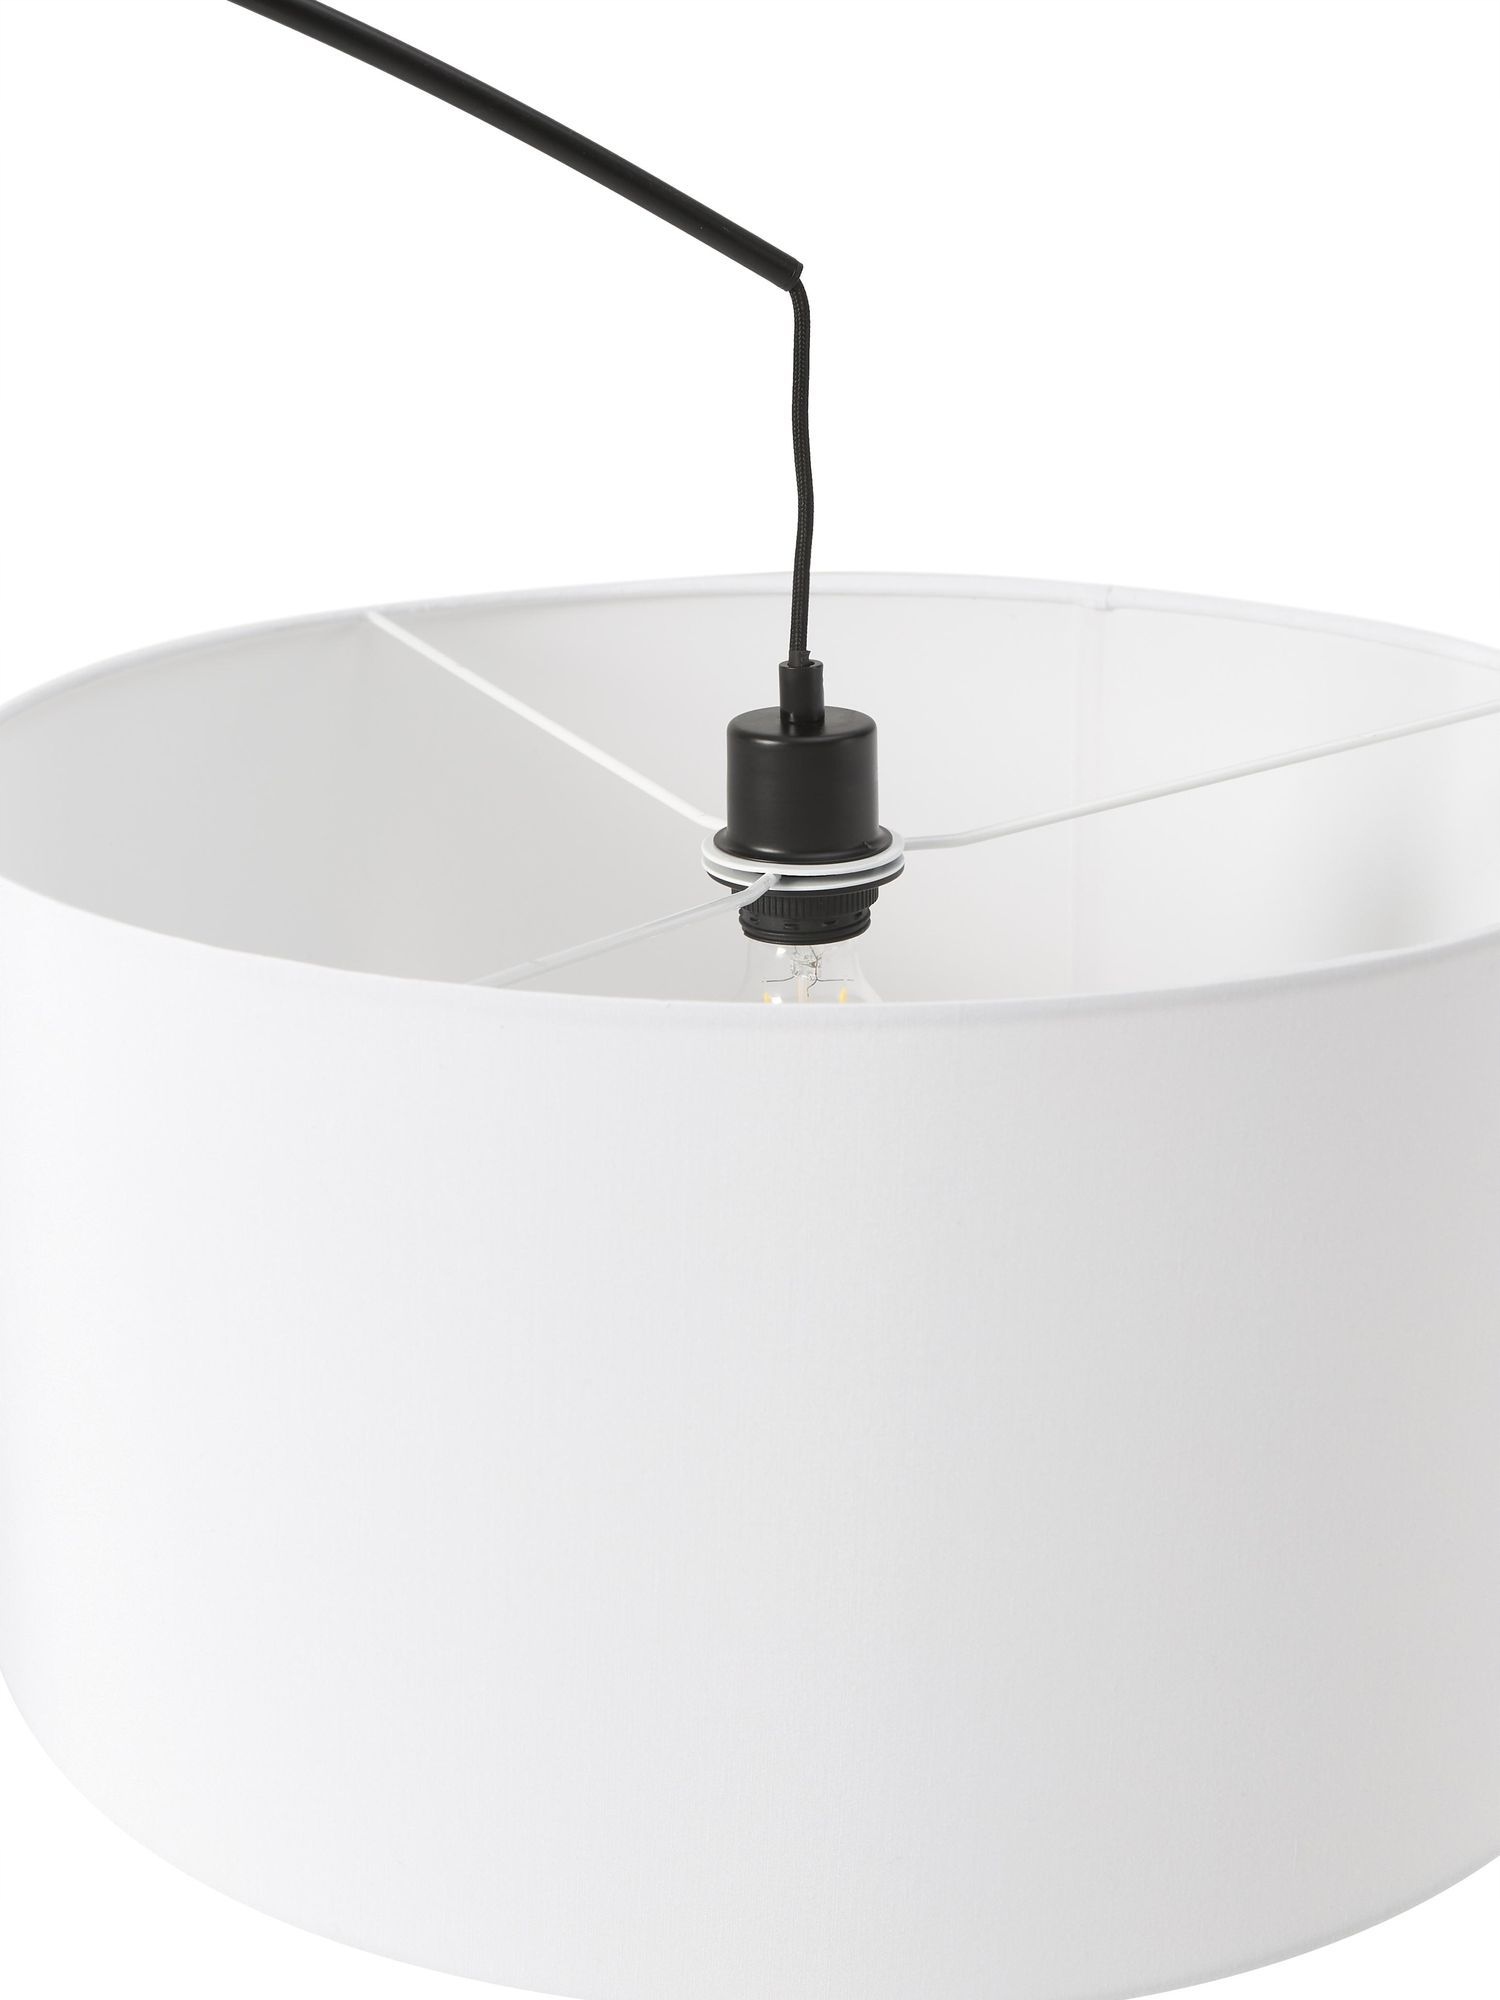 Duża lampa łukowa Niels biało-czarna Kod producenta DEL9LIT04-112